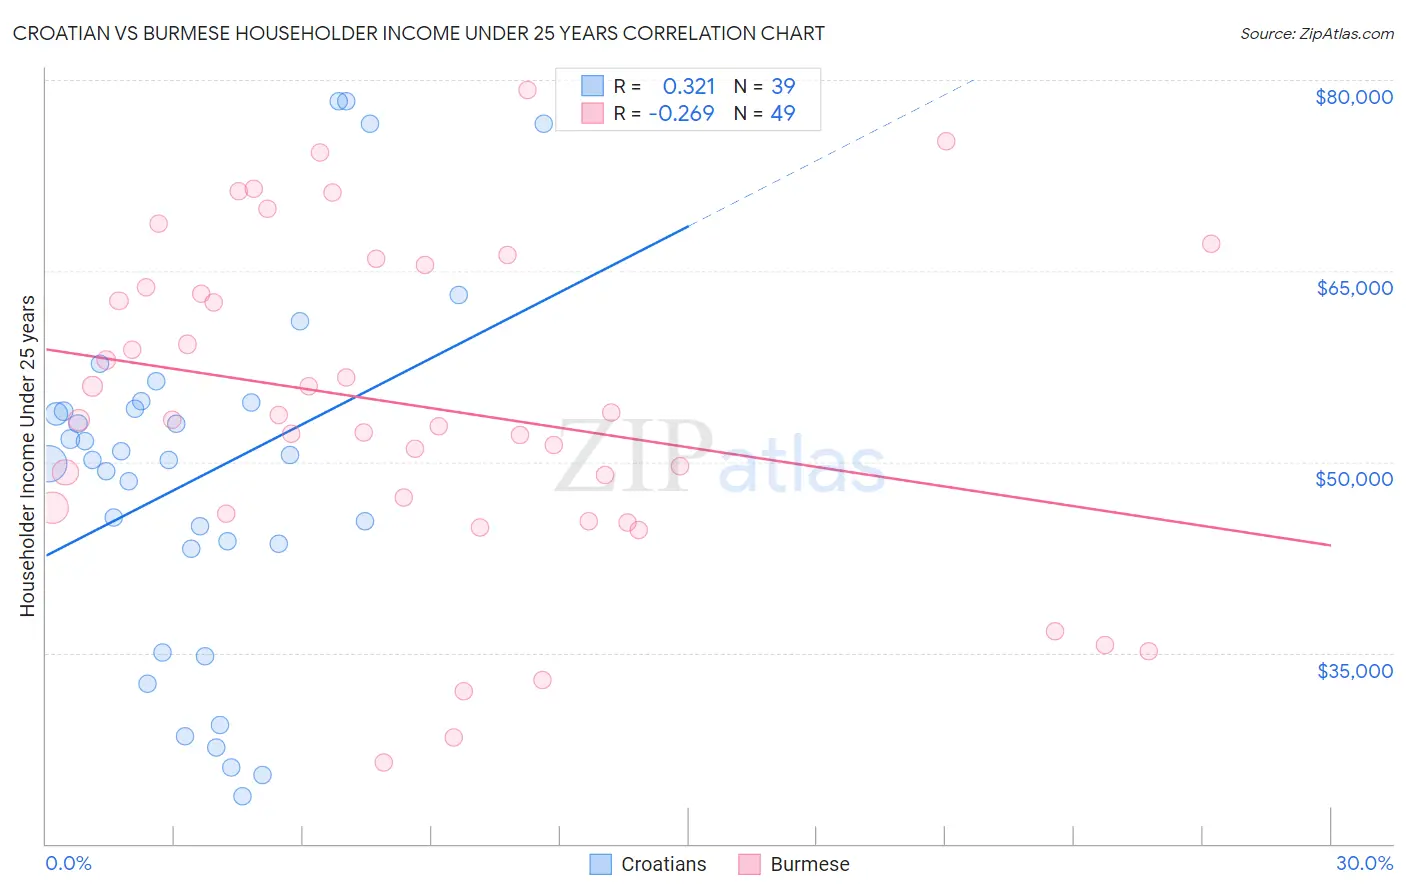 Croatian vs Burmese Householder Income Under 25 years